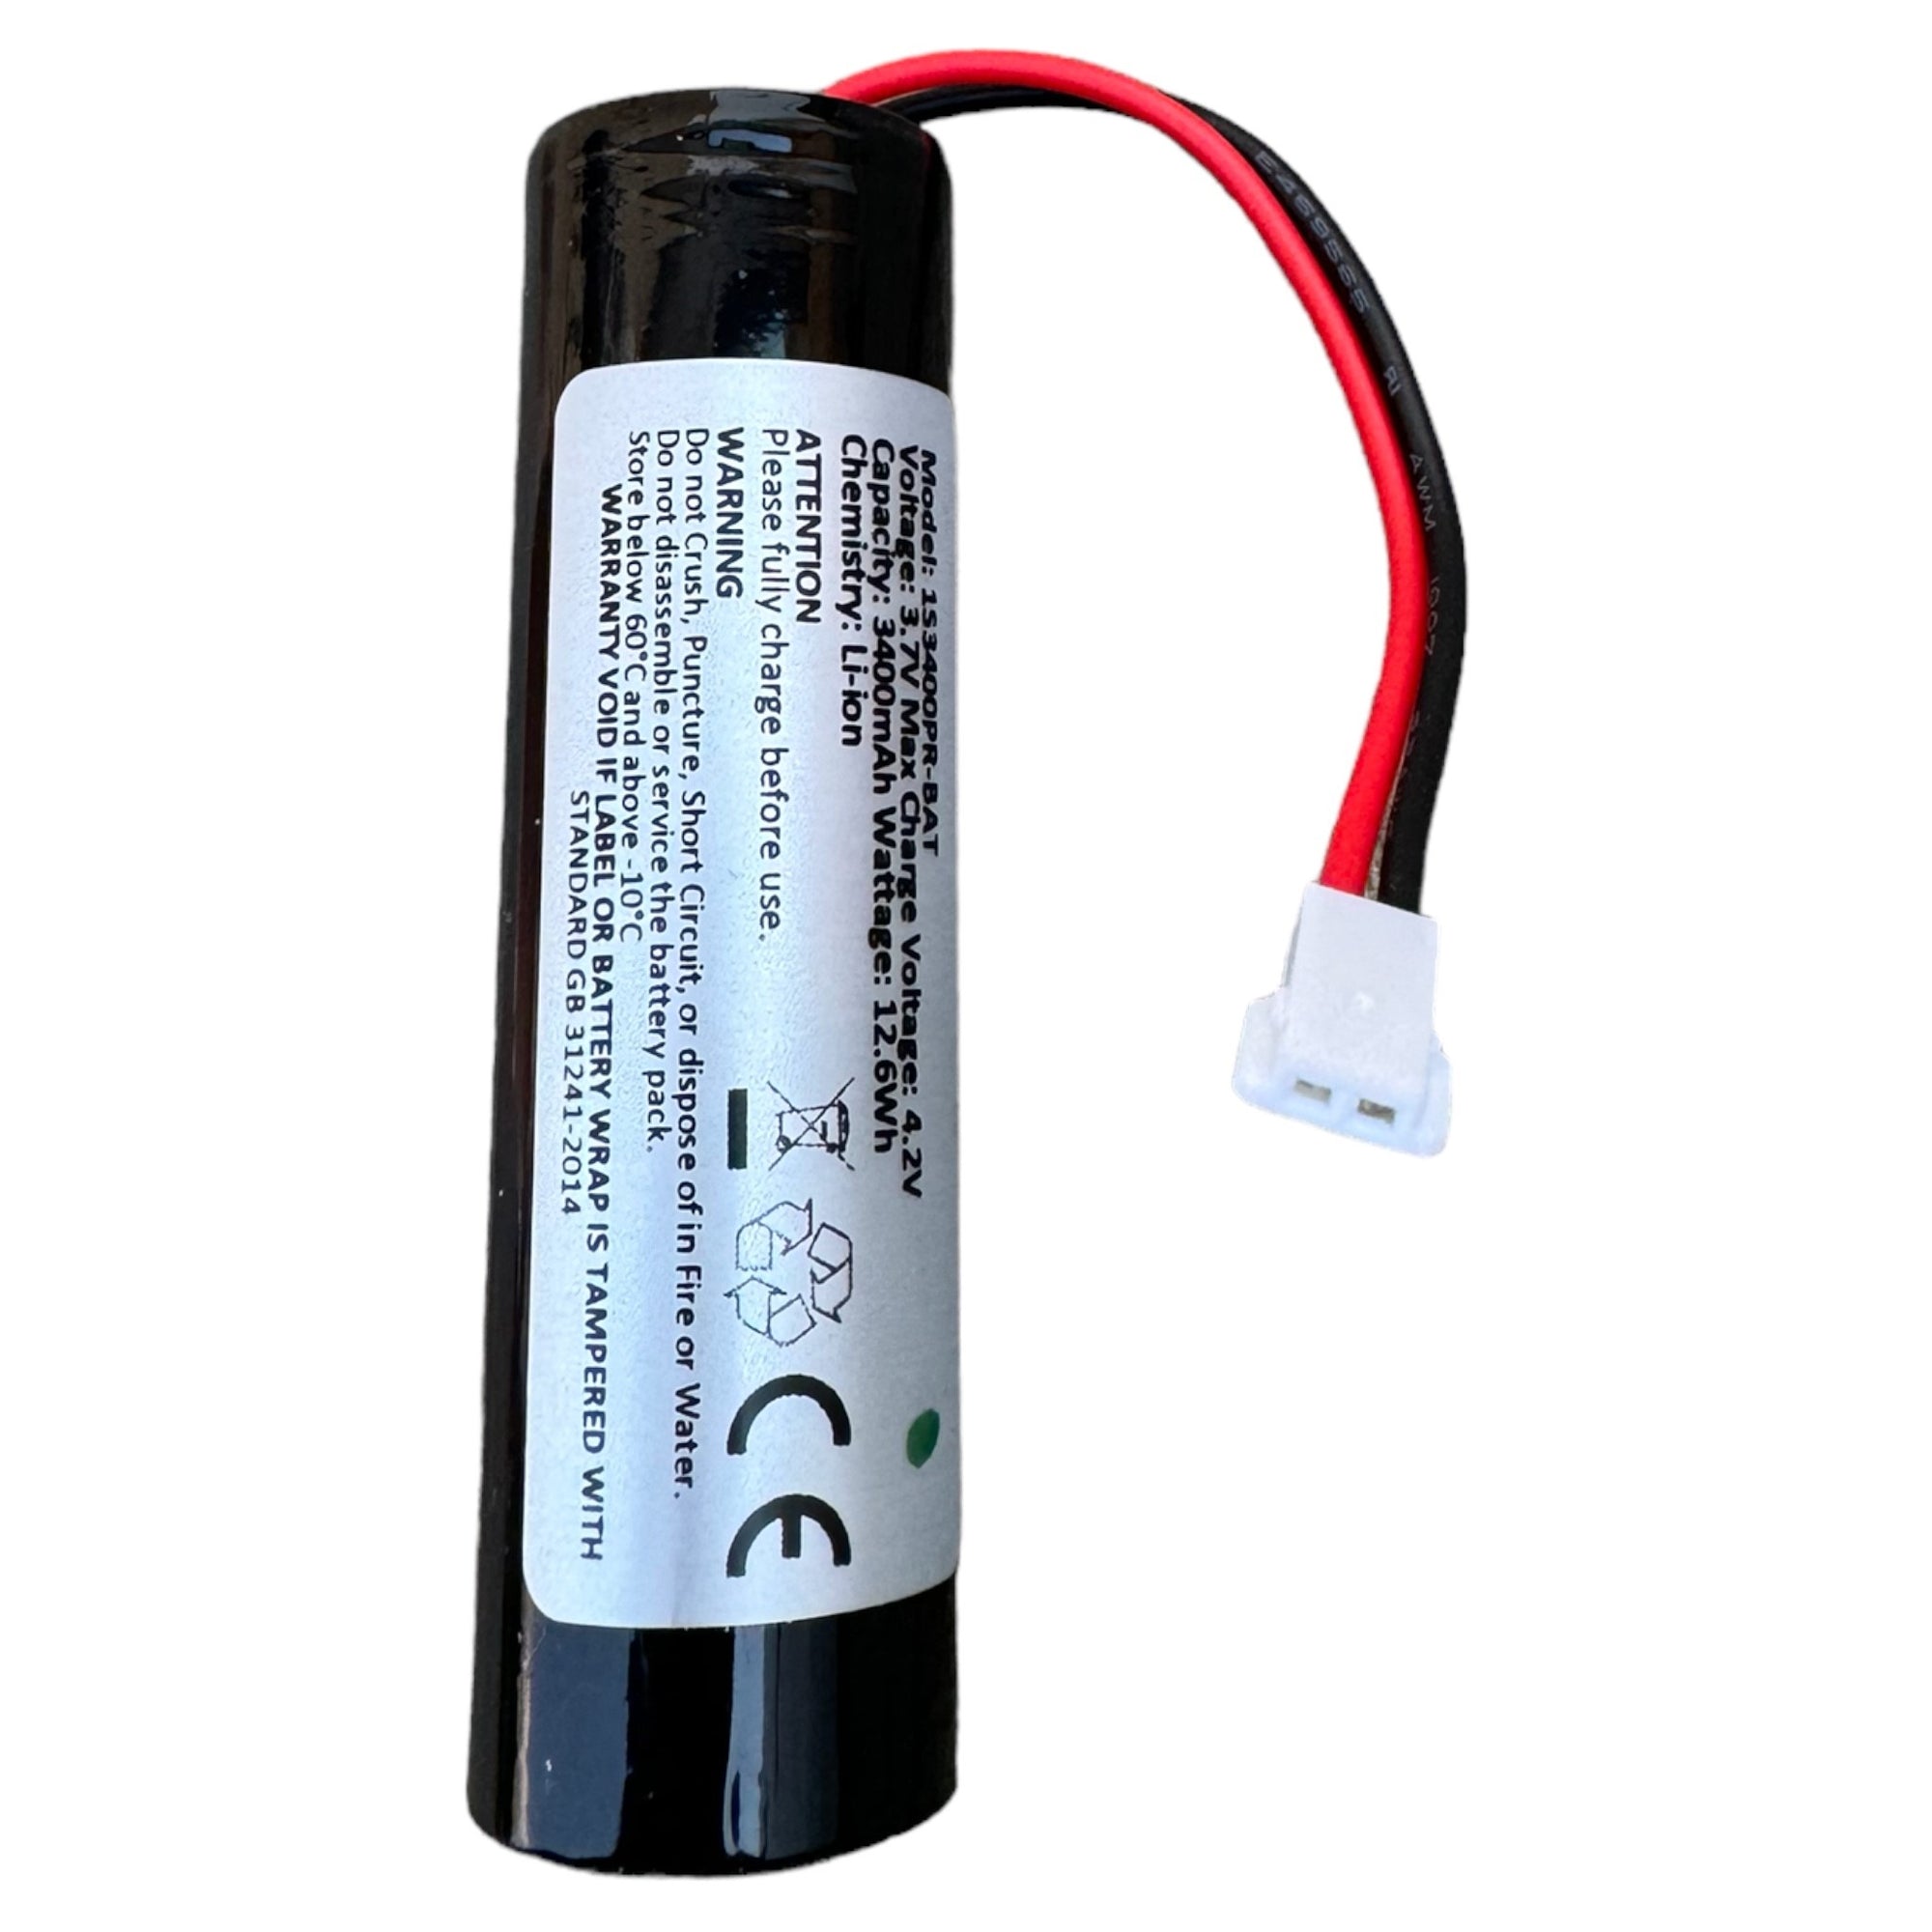 1s 3.7v Li-ion 3400mah rechargeable battery with mx 51005 plug